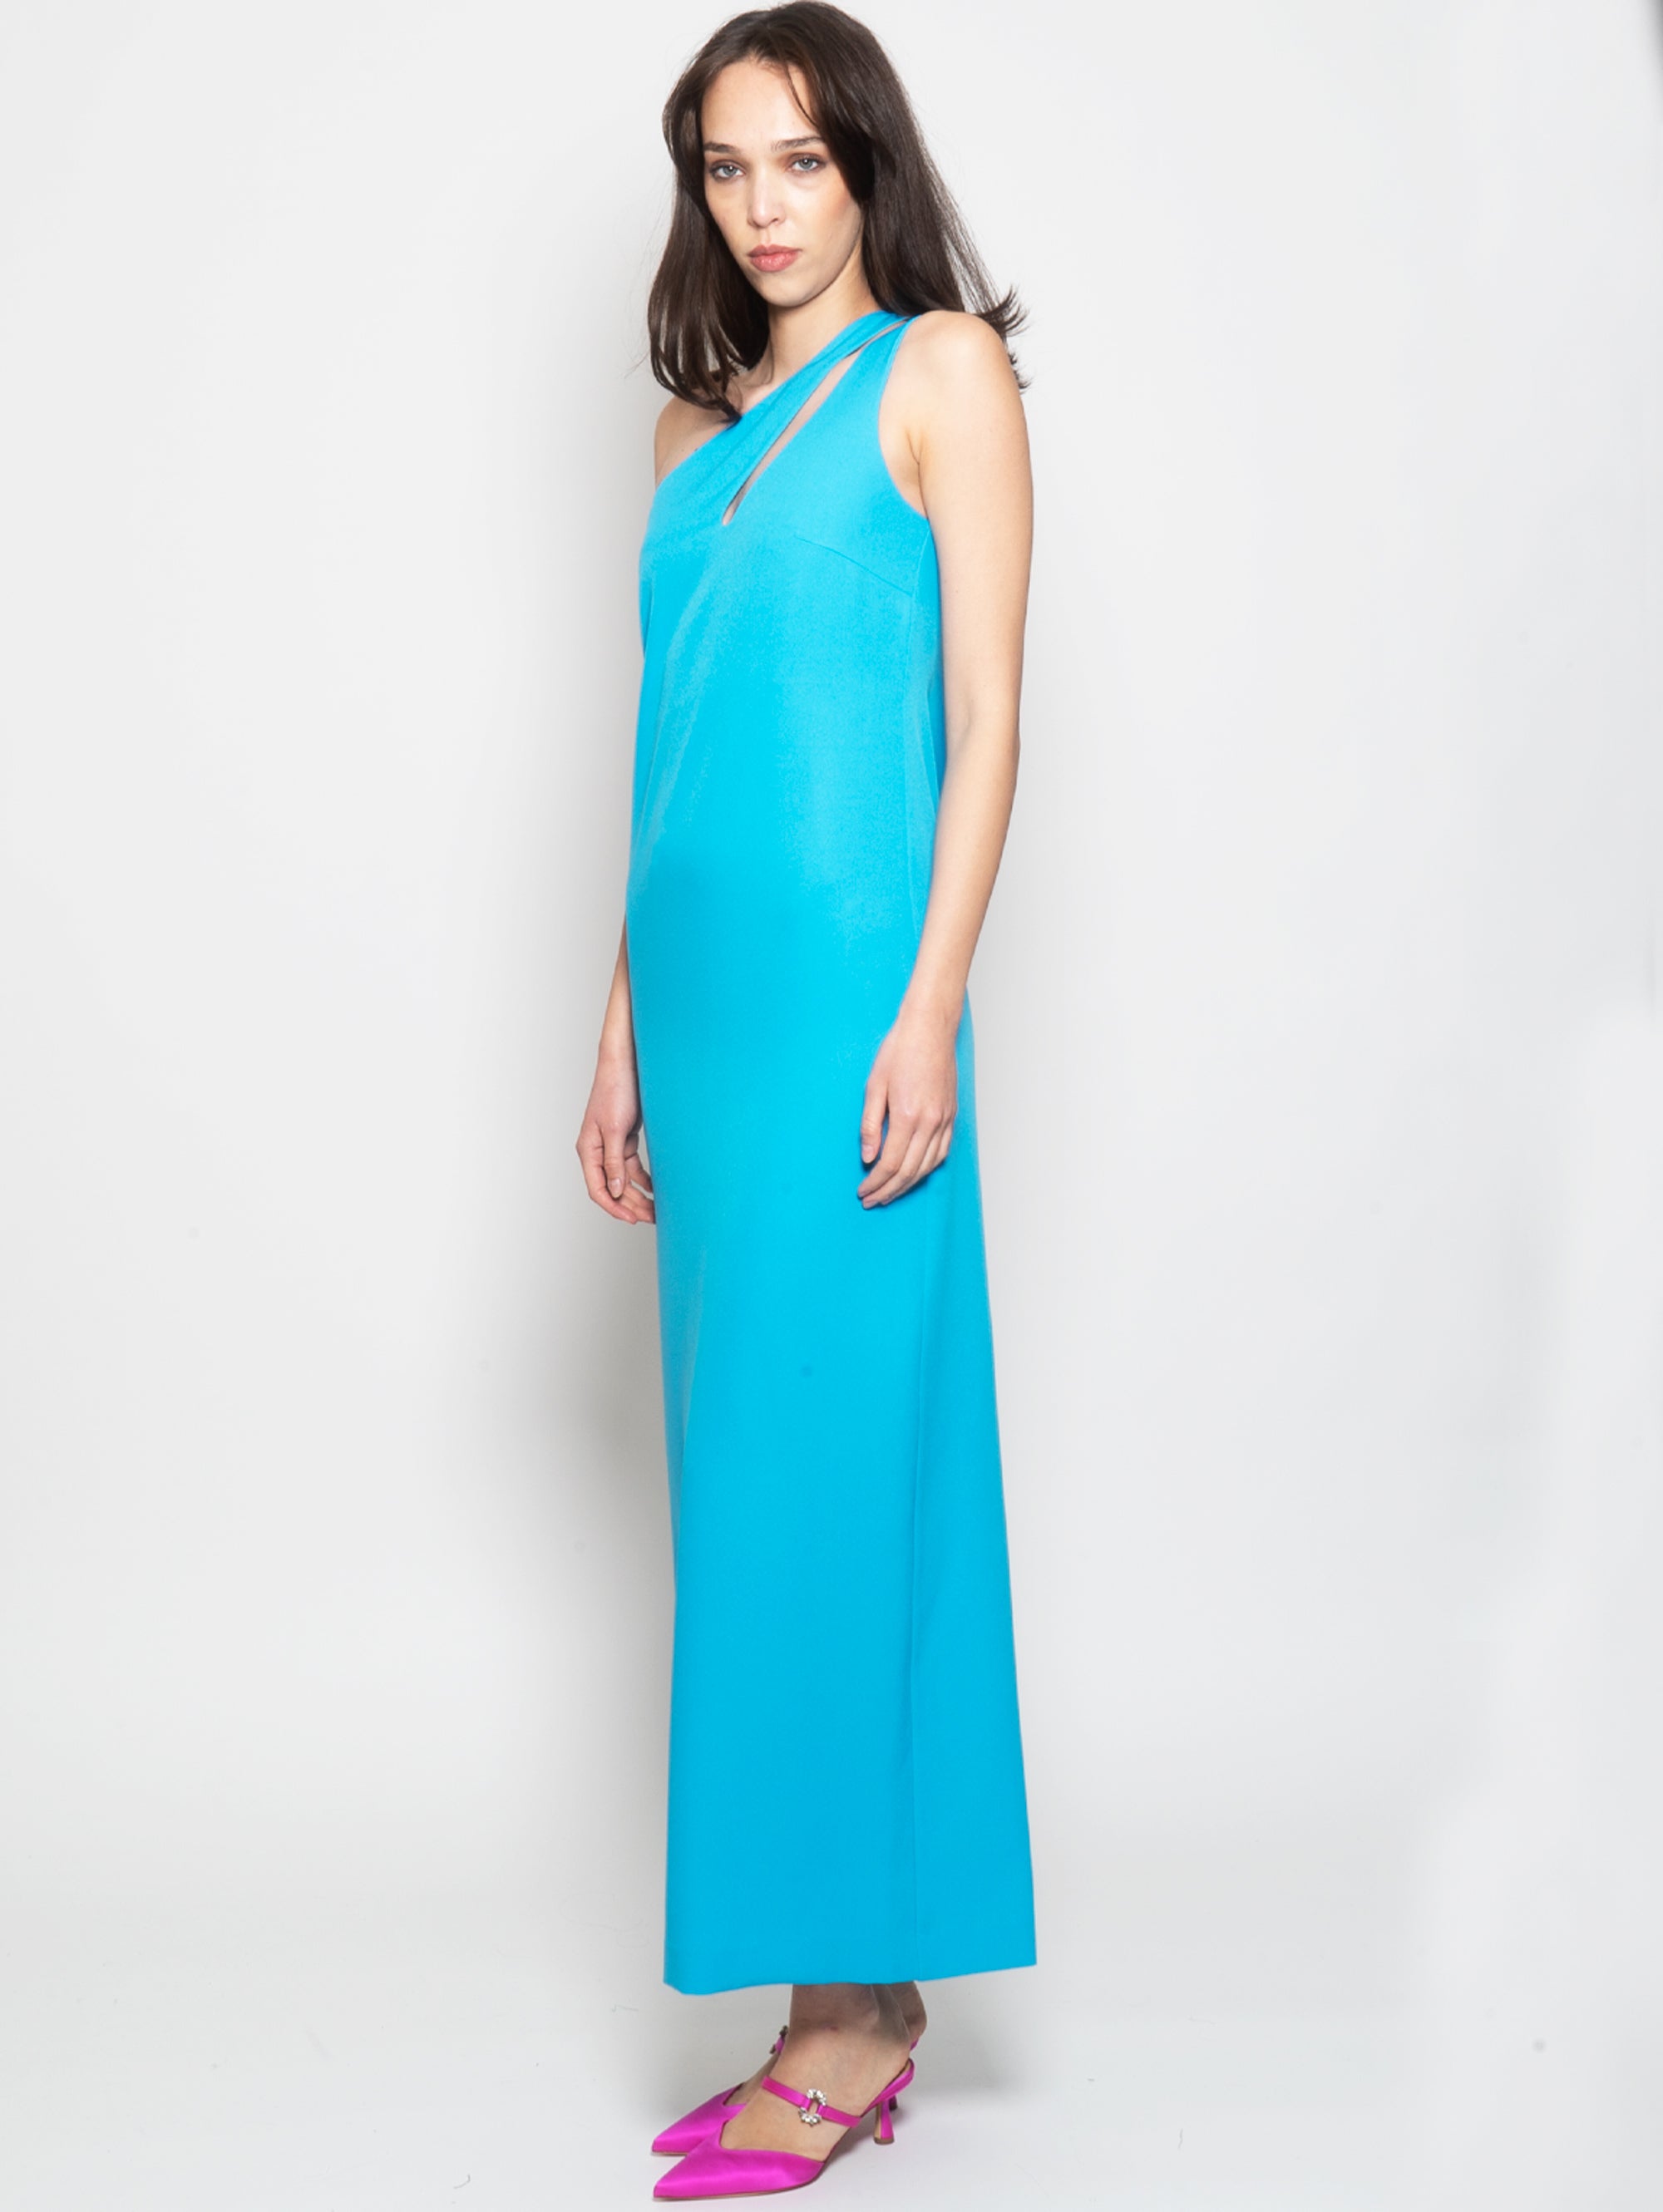 Turquoise One Shoulder Long Dress